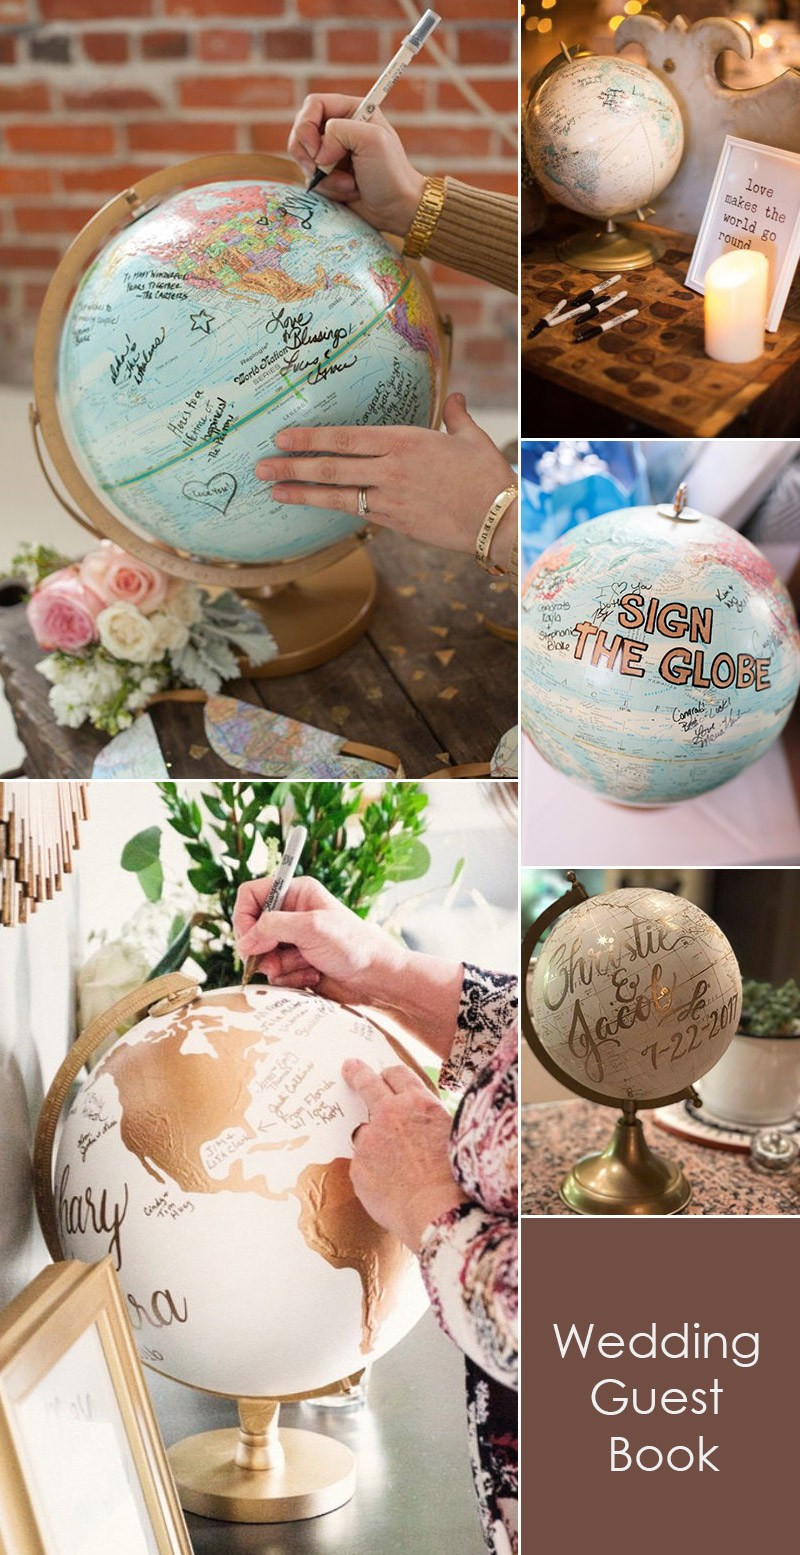 Travel Themed Wedding Centerpieces
 75 Creative Travel Themed Wedding Ideas That Inspire